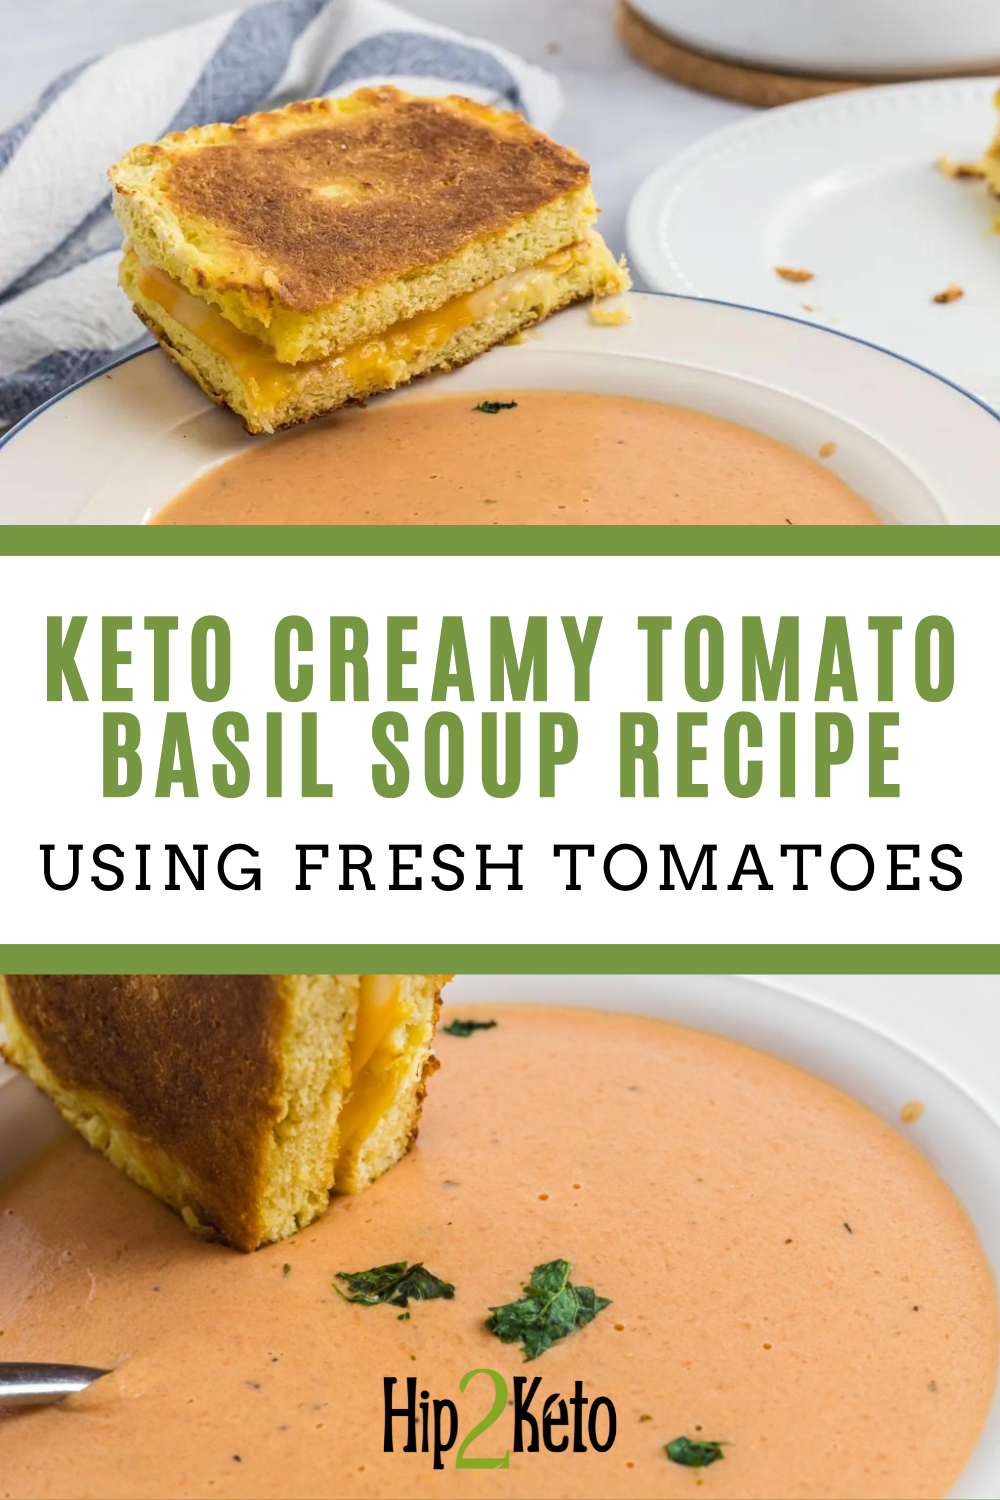 Keto Tomato Basil Soup - Easy to Make & Low-Carb | Hip2Keto Recipe